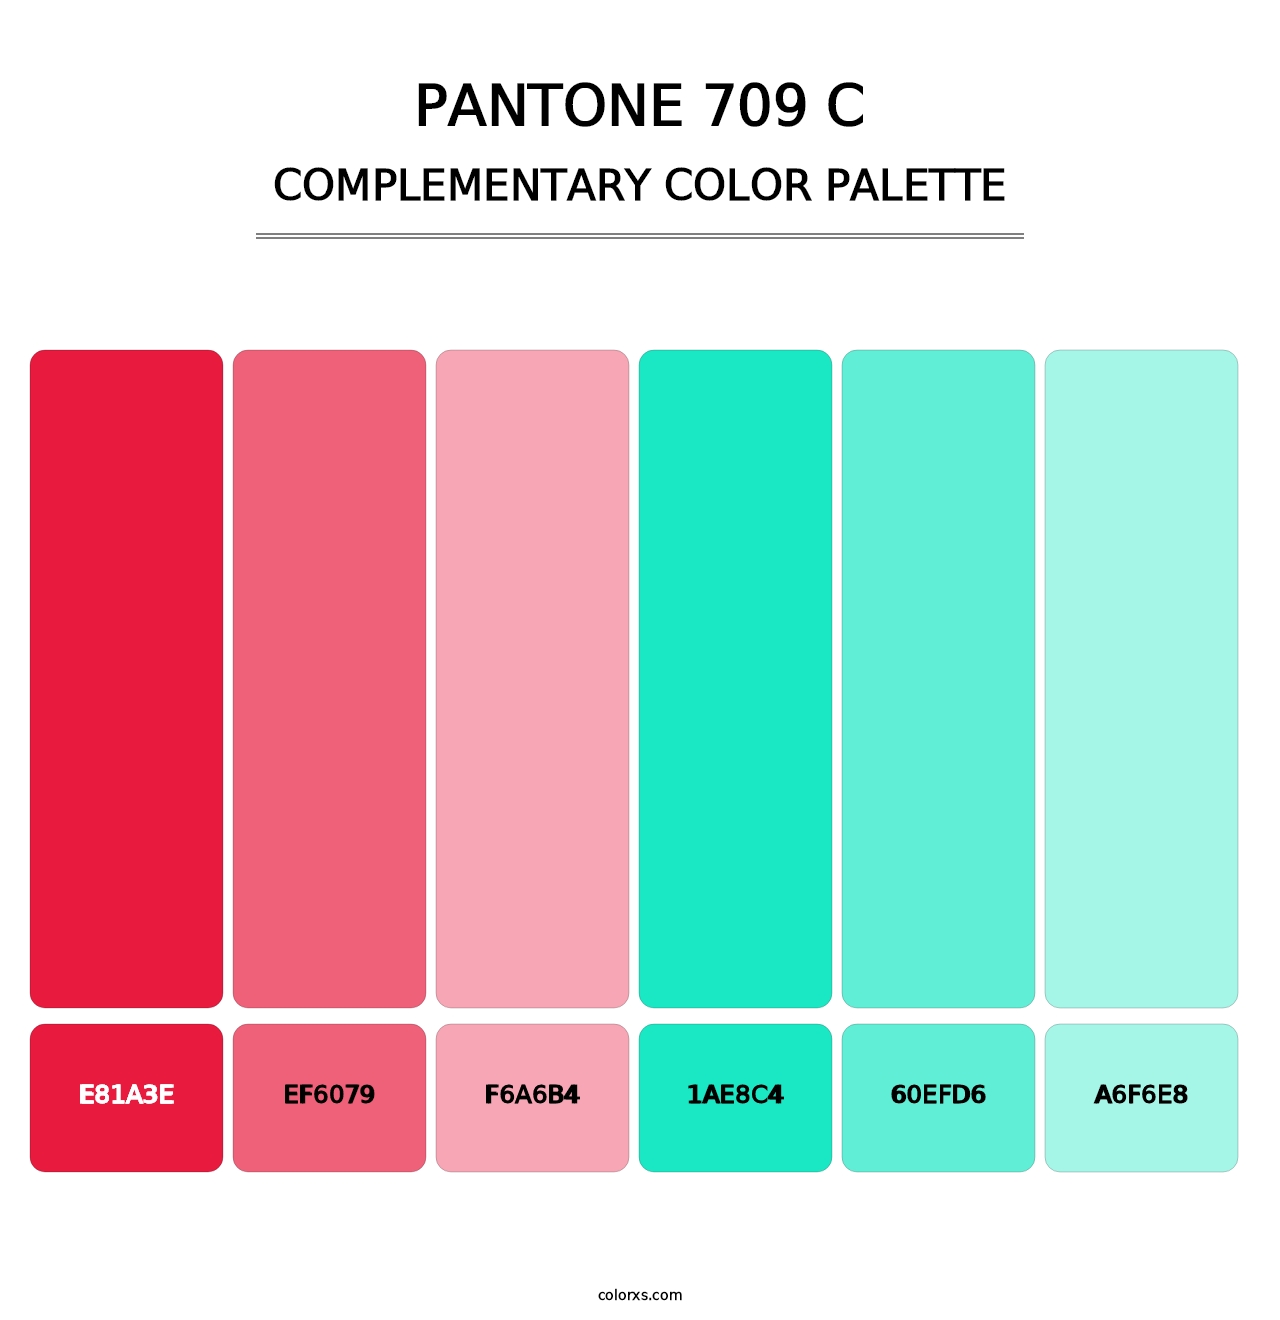 PANTONE 709 C - Complementary Color Palette